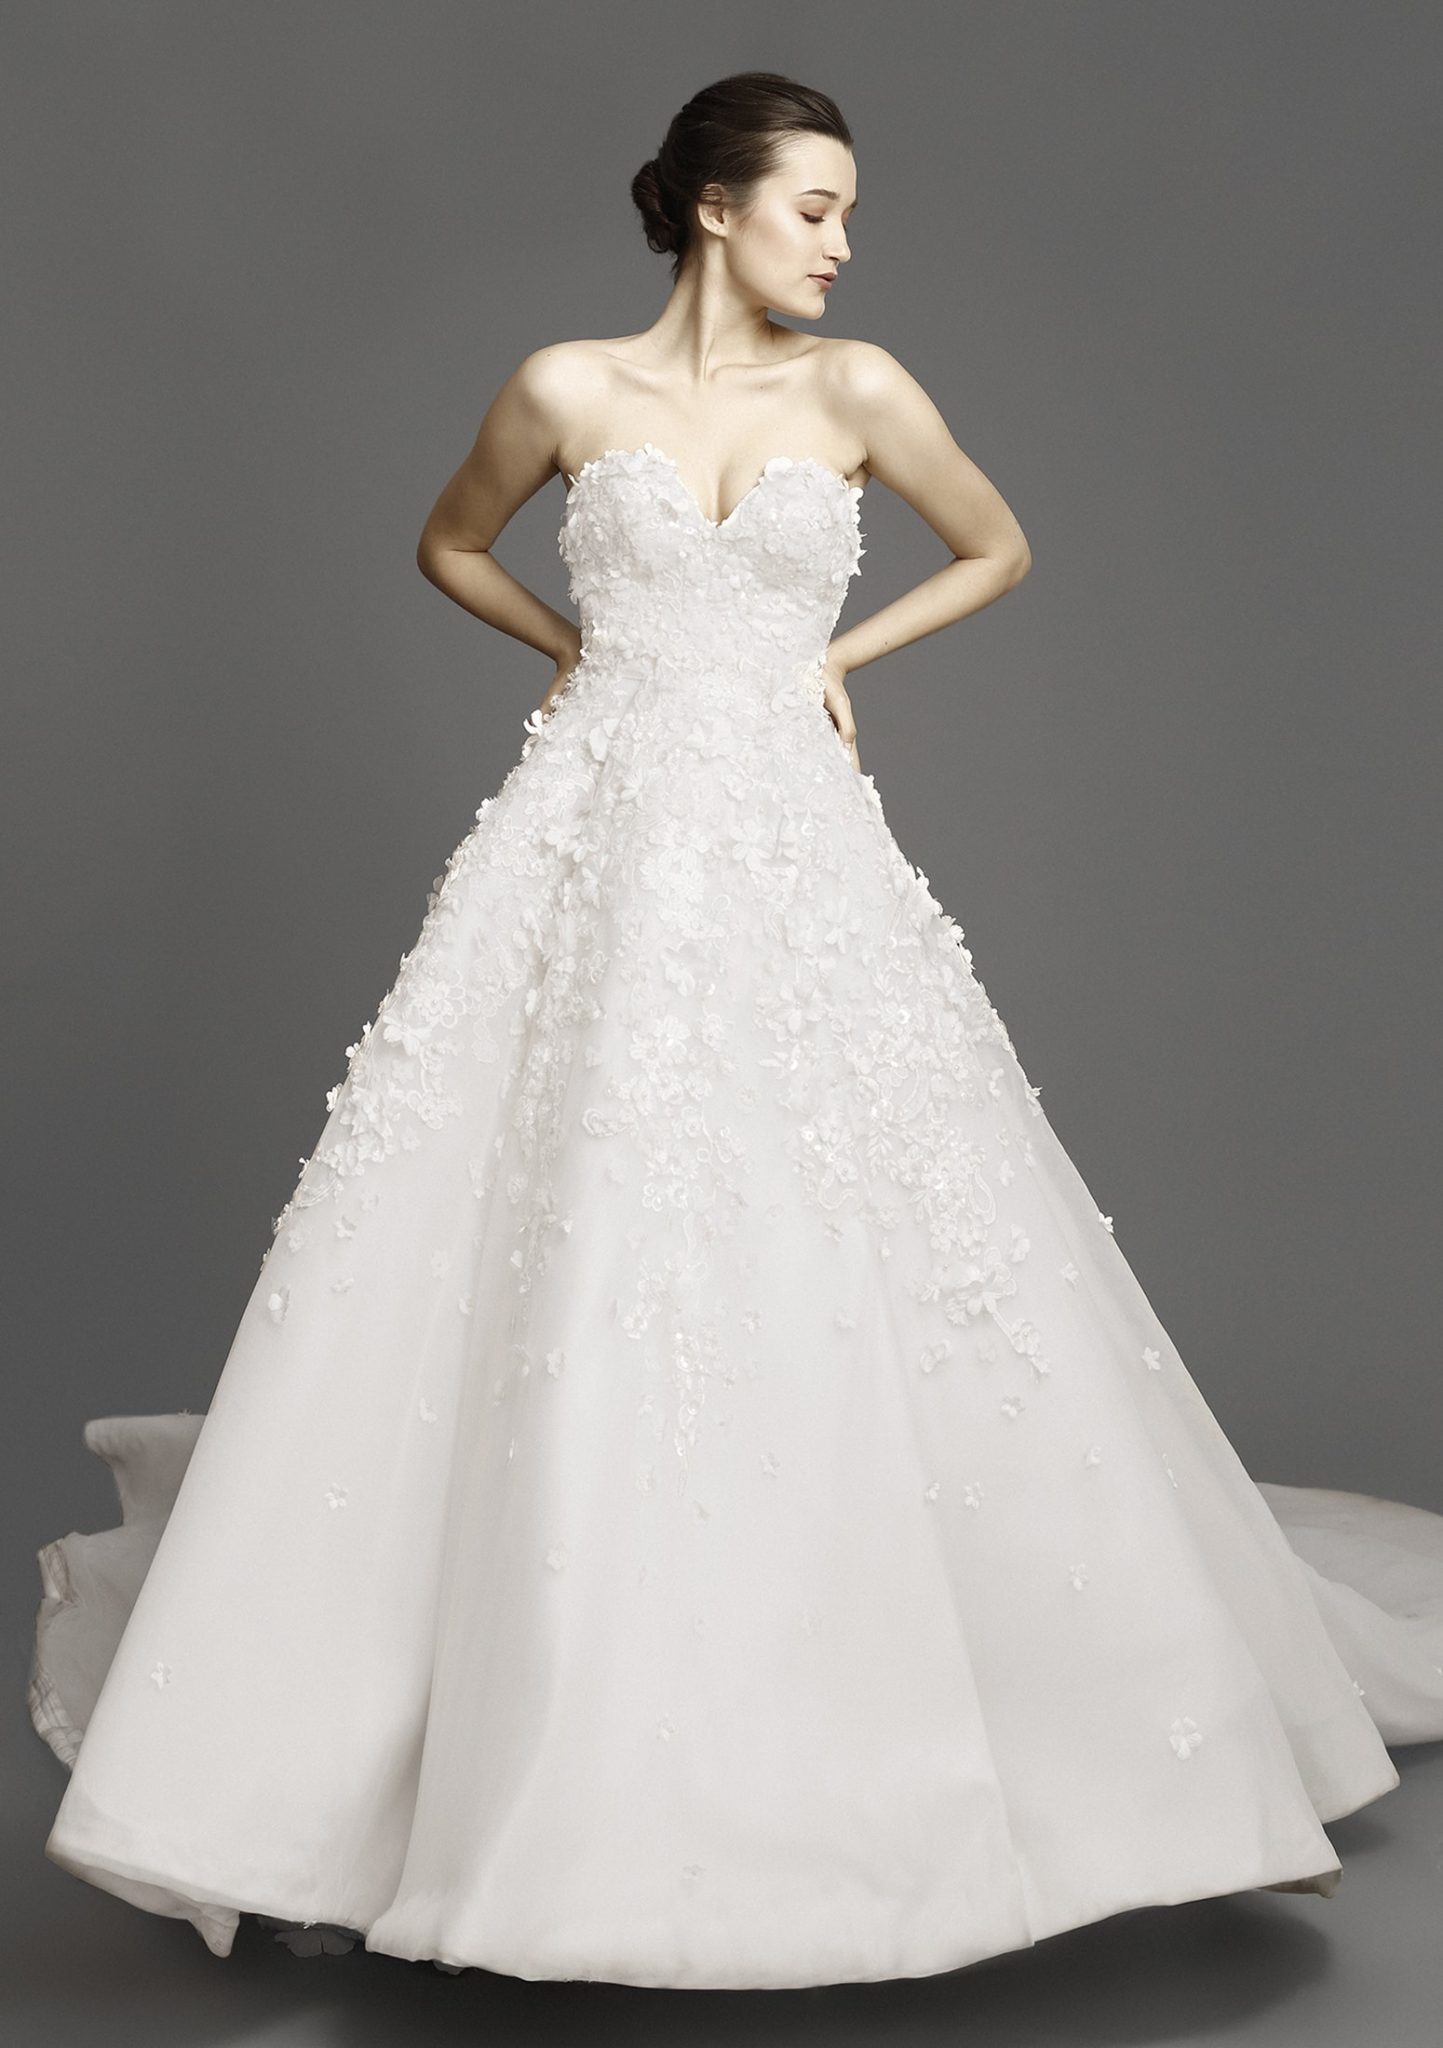 Top 10 Filipino Wedding Gown Designers - Edel Alon